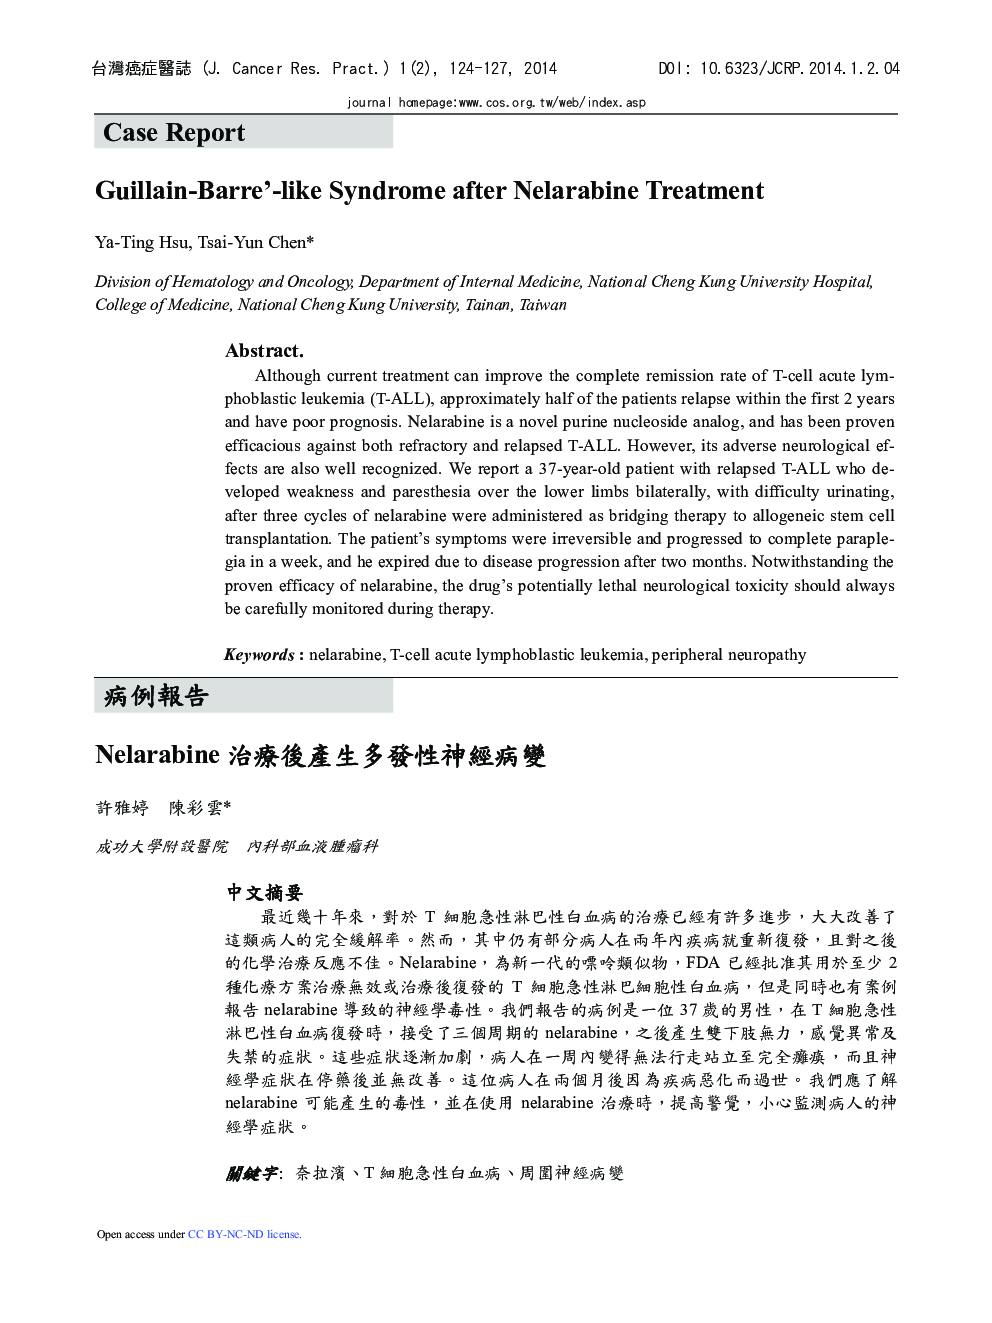 Guillain-Barre’-like Syndrome after Nelarabine Treatment